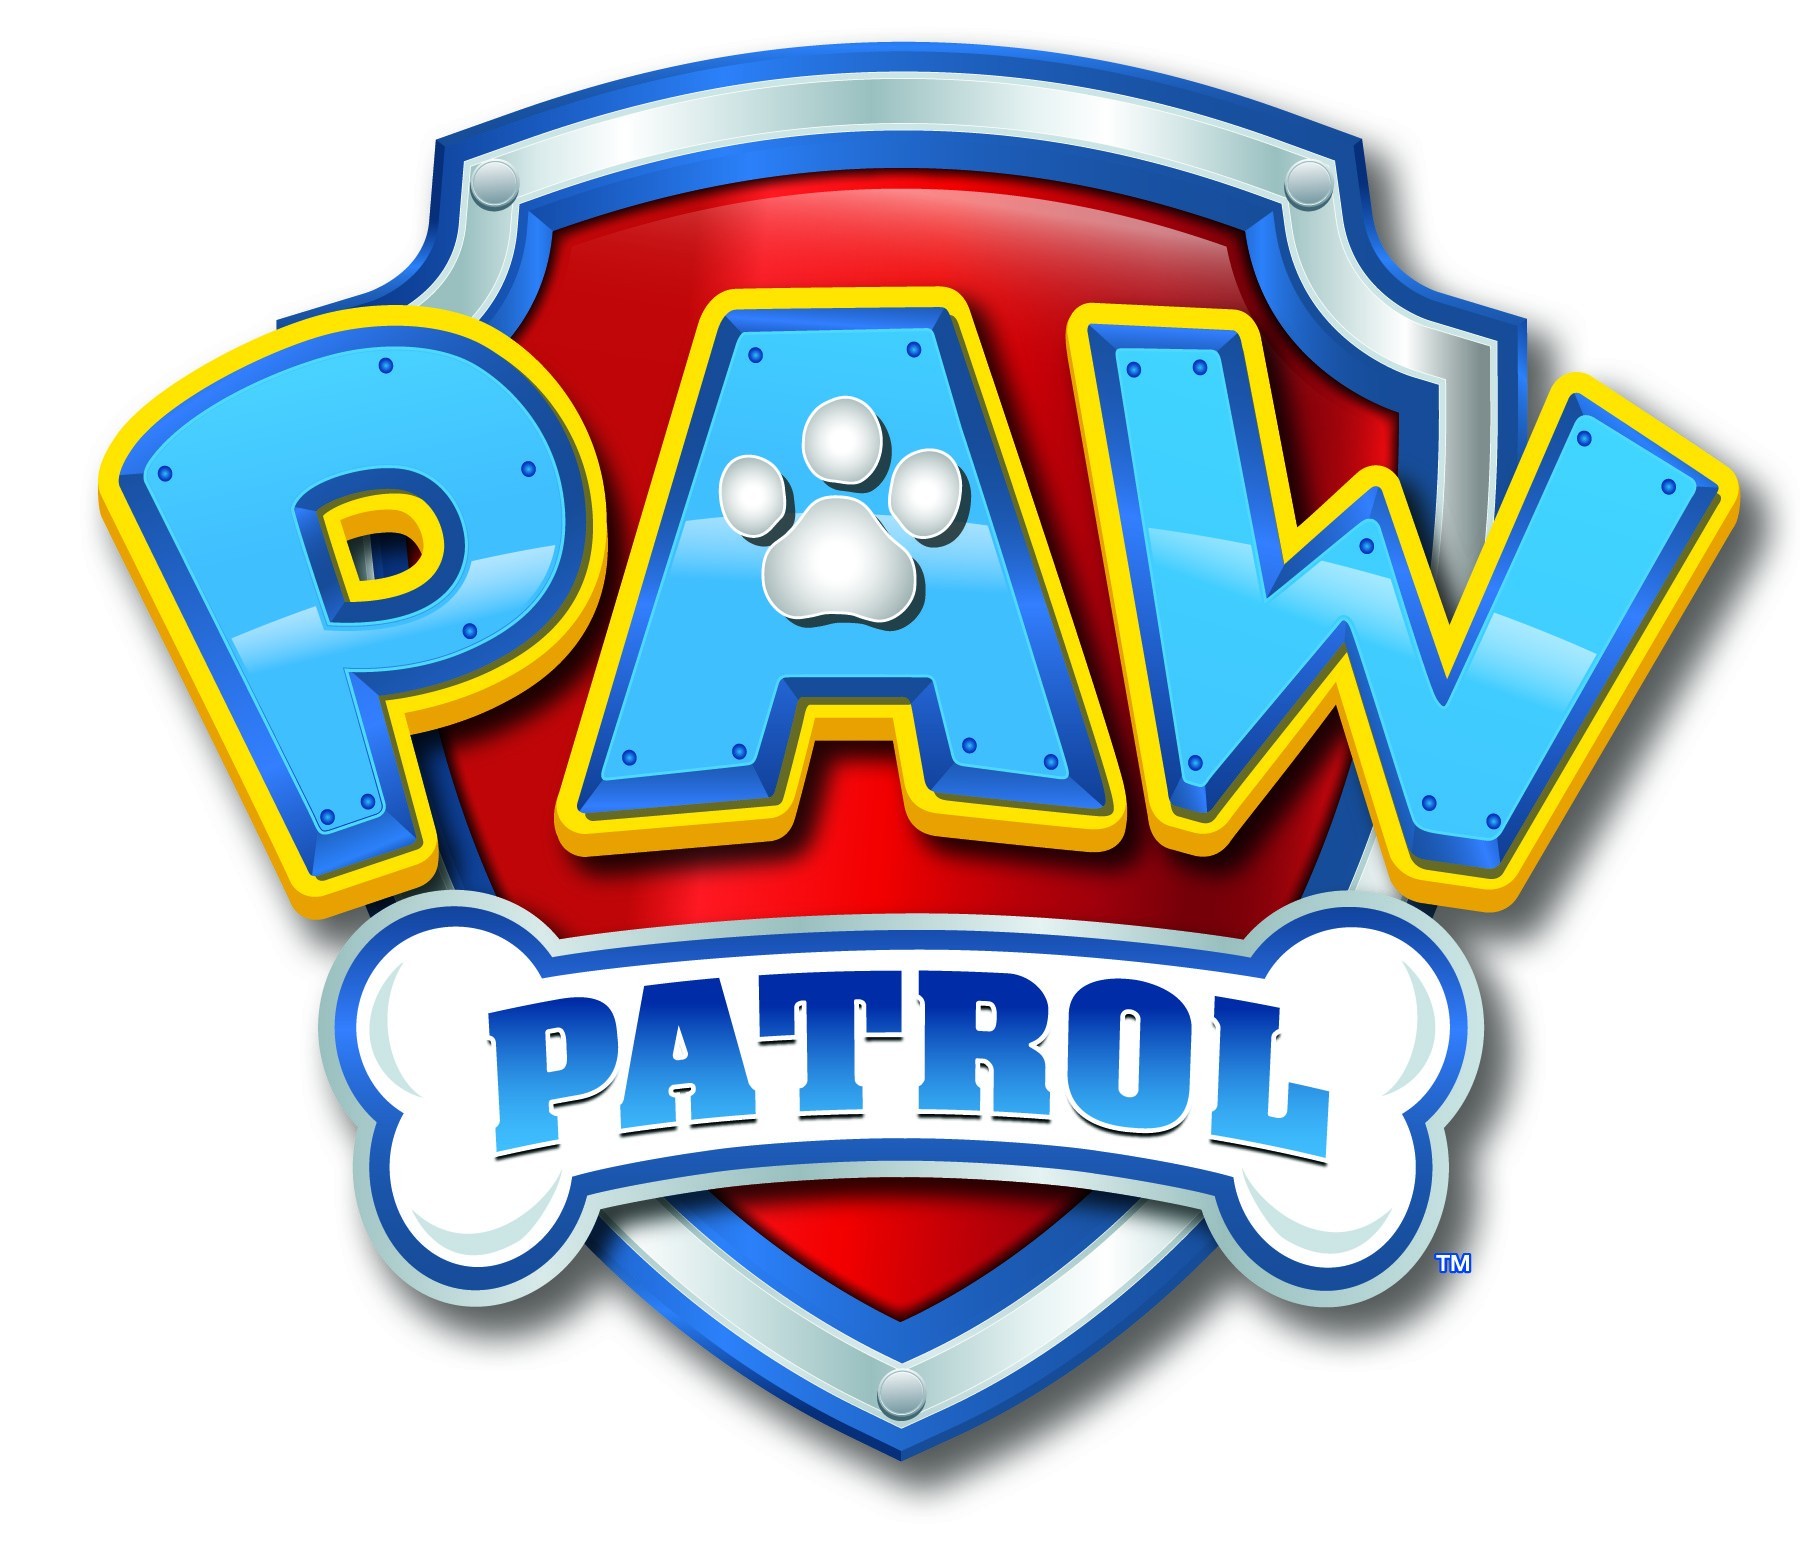 Paw patrol images svg free - rvhon